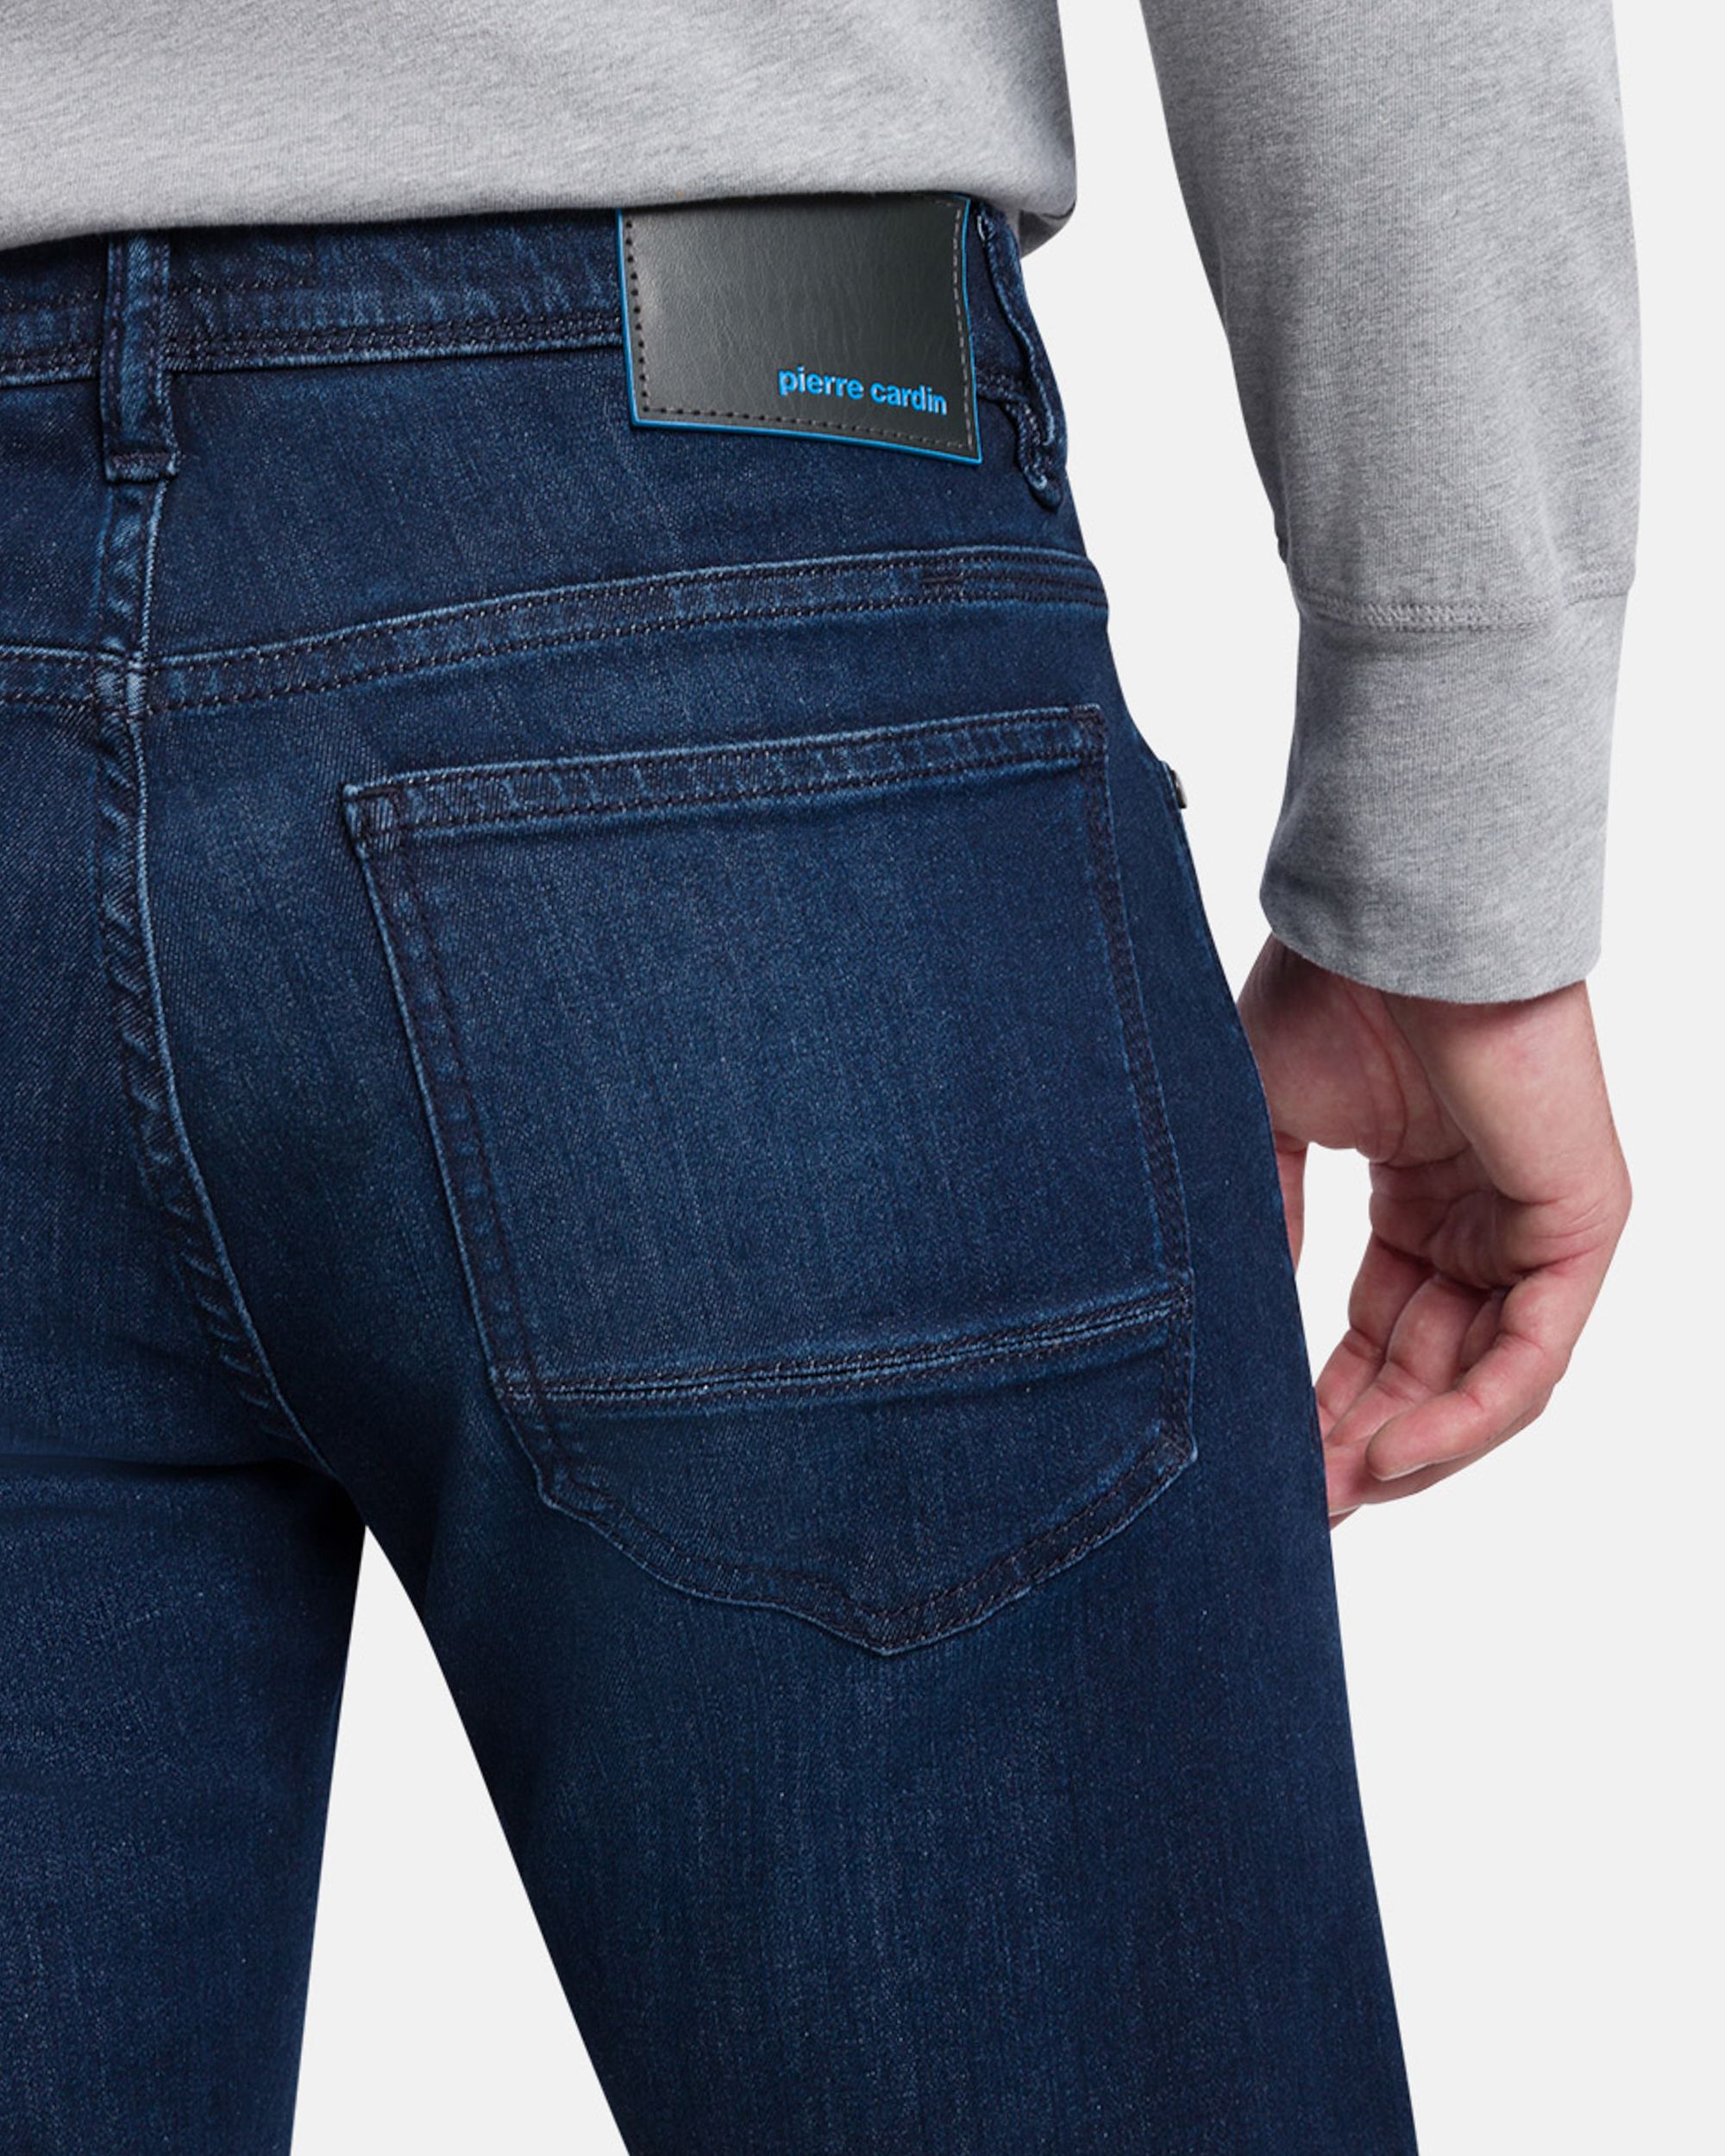 Pierre Cardin Jeans | Shop nu - Only for Men